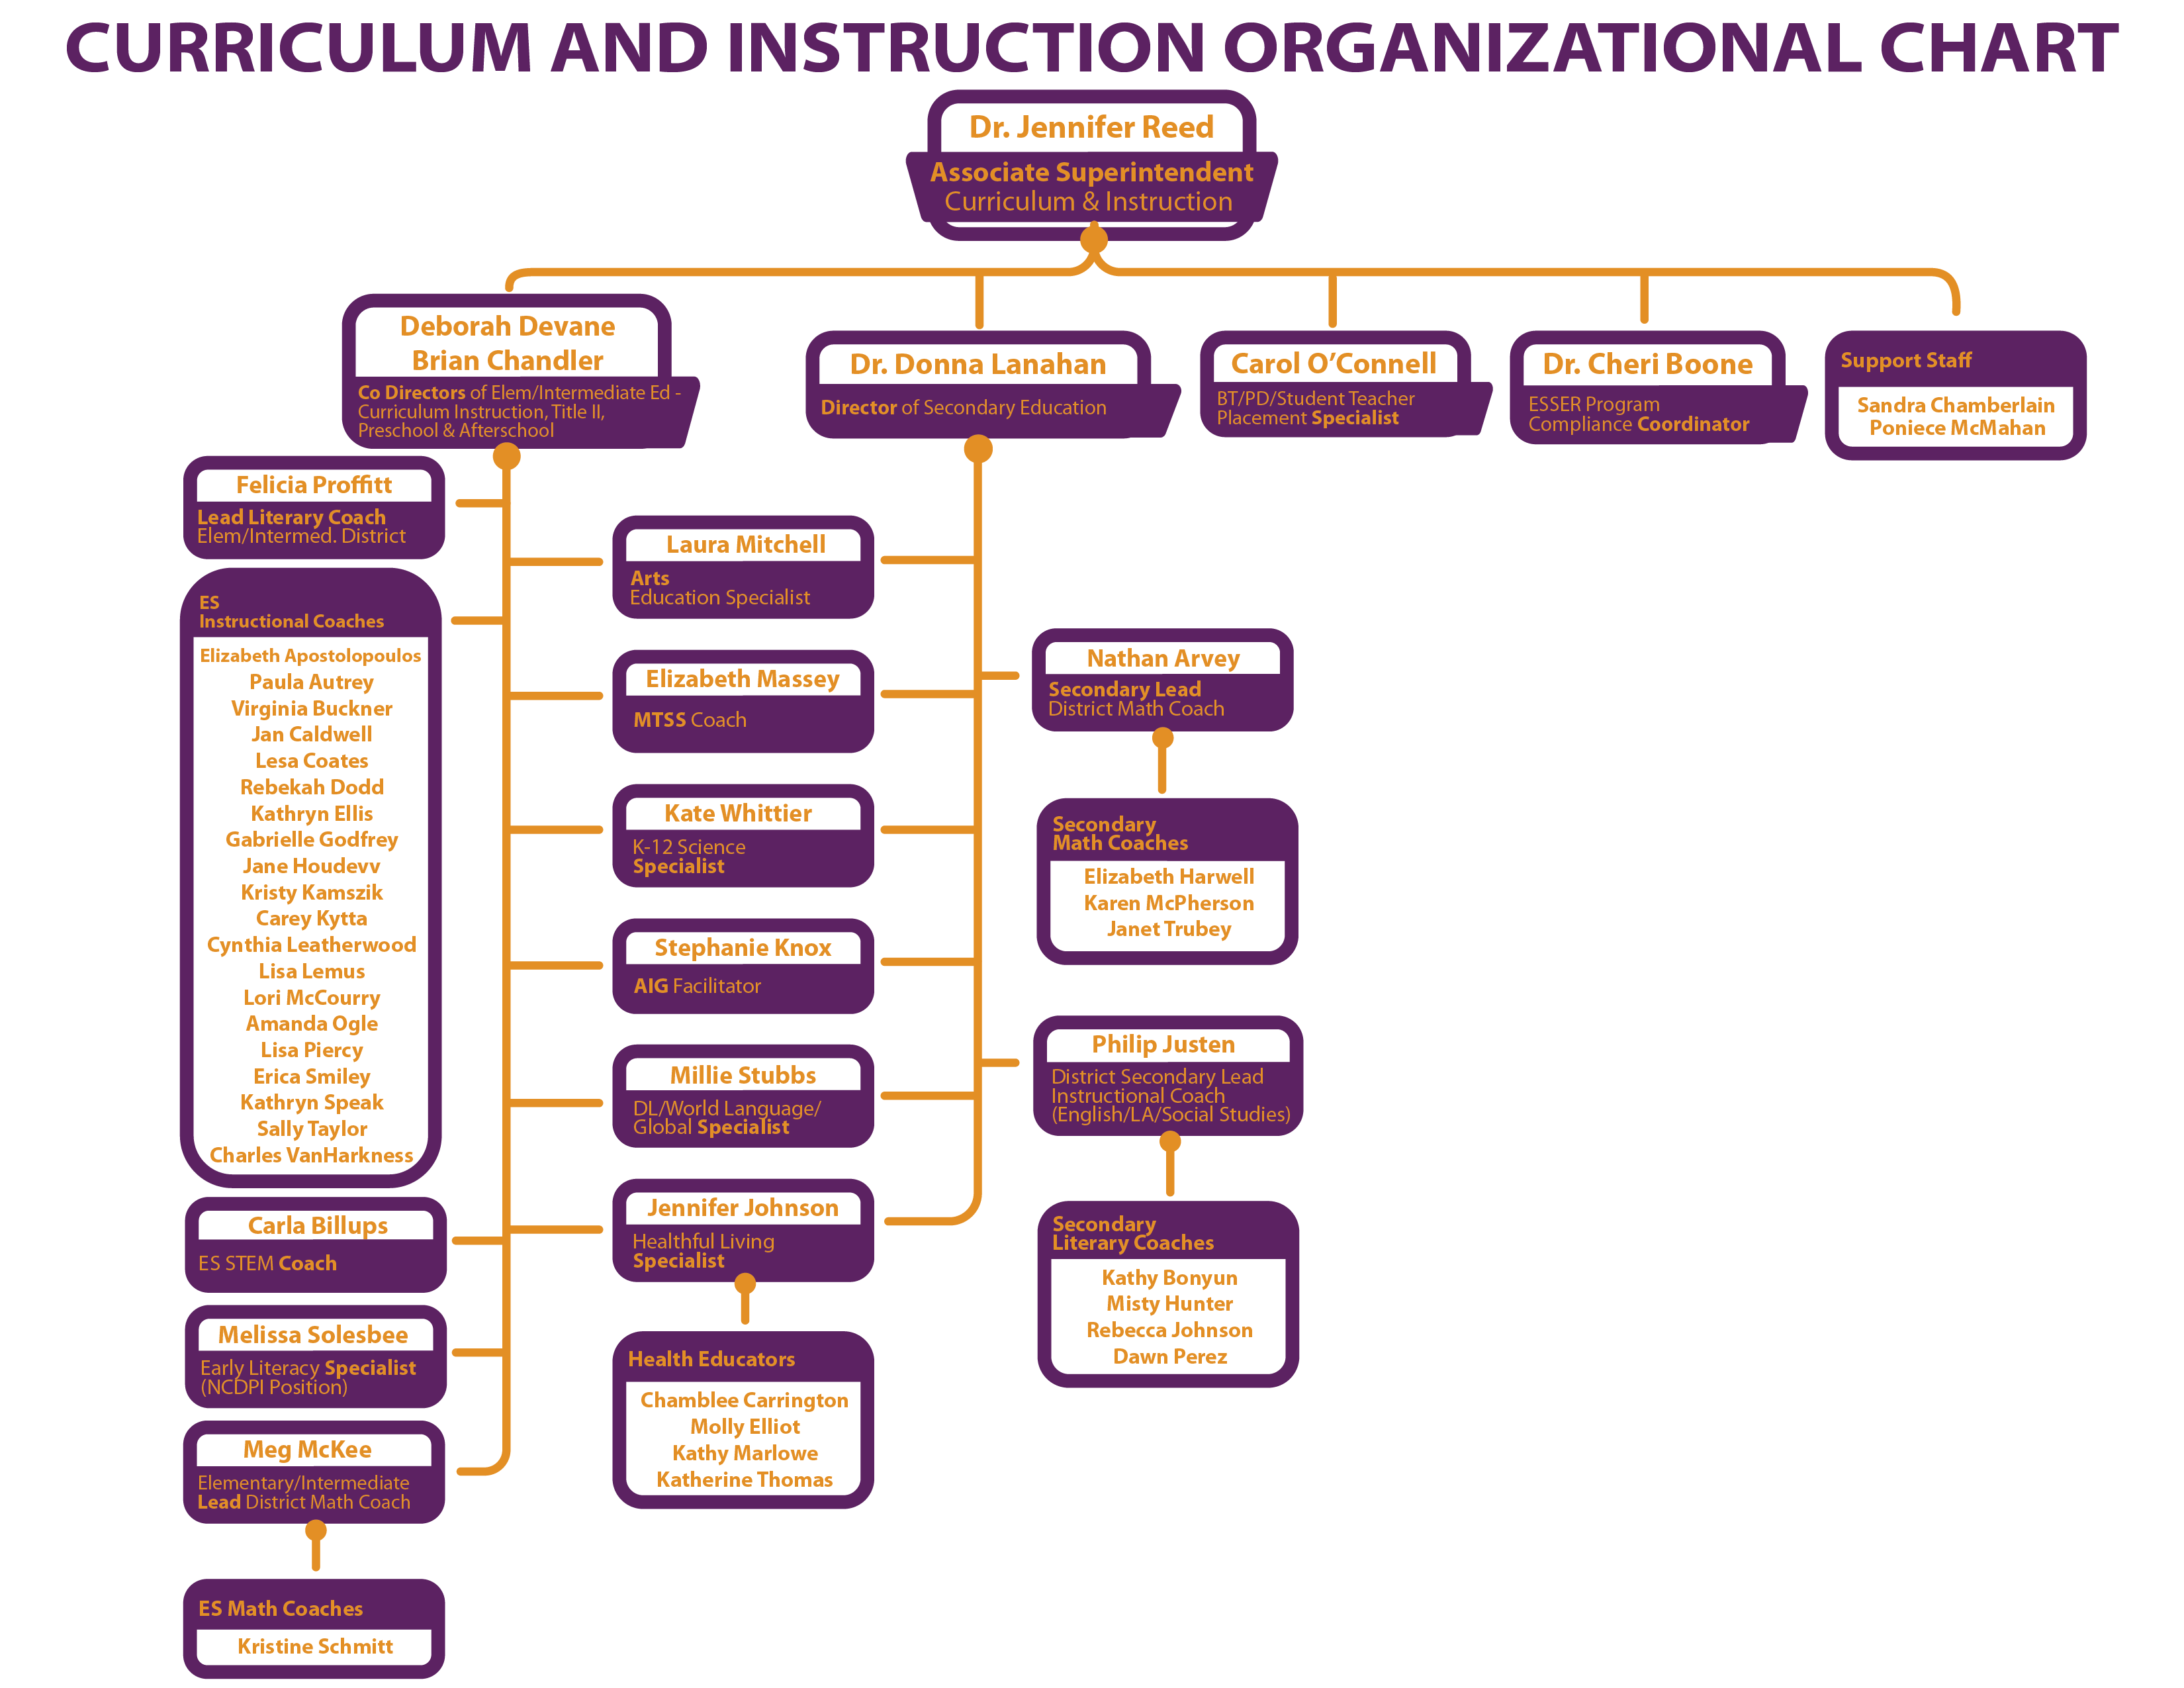 Curriculum and Instruction Organizational Chart